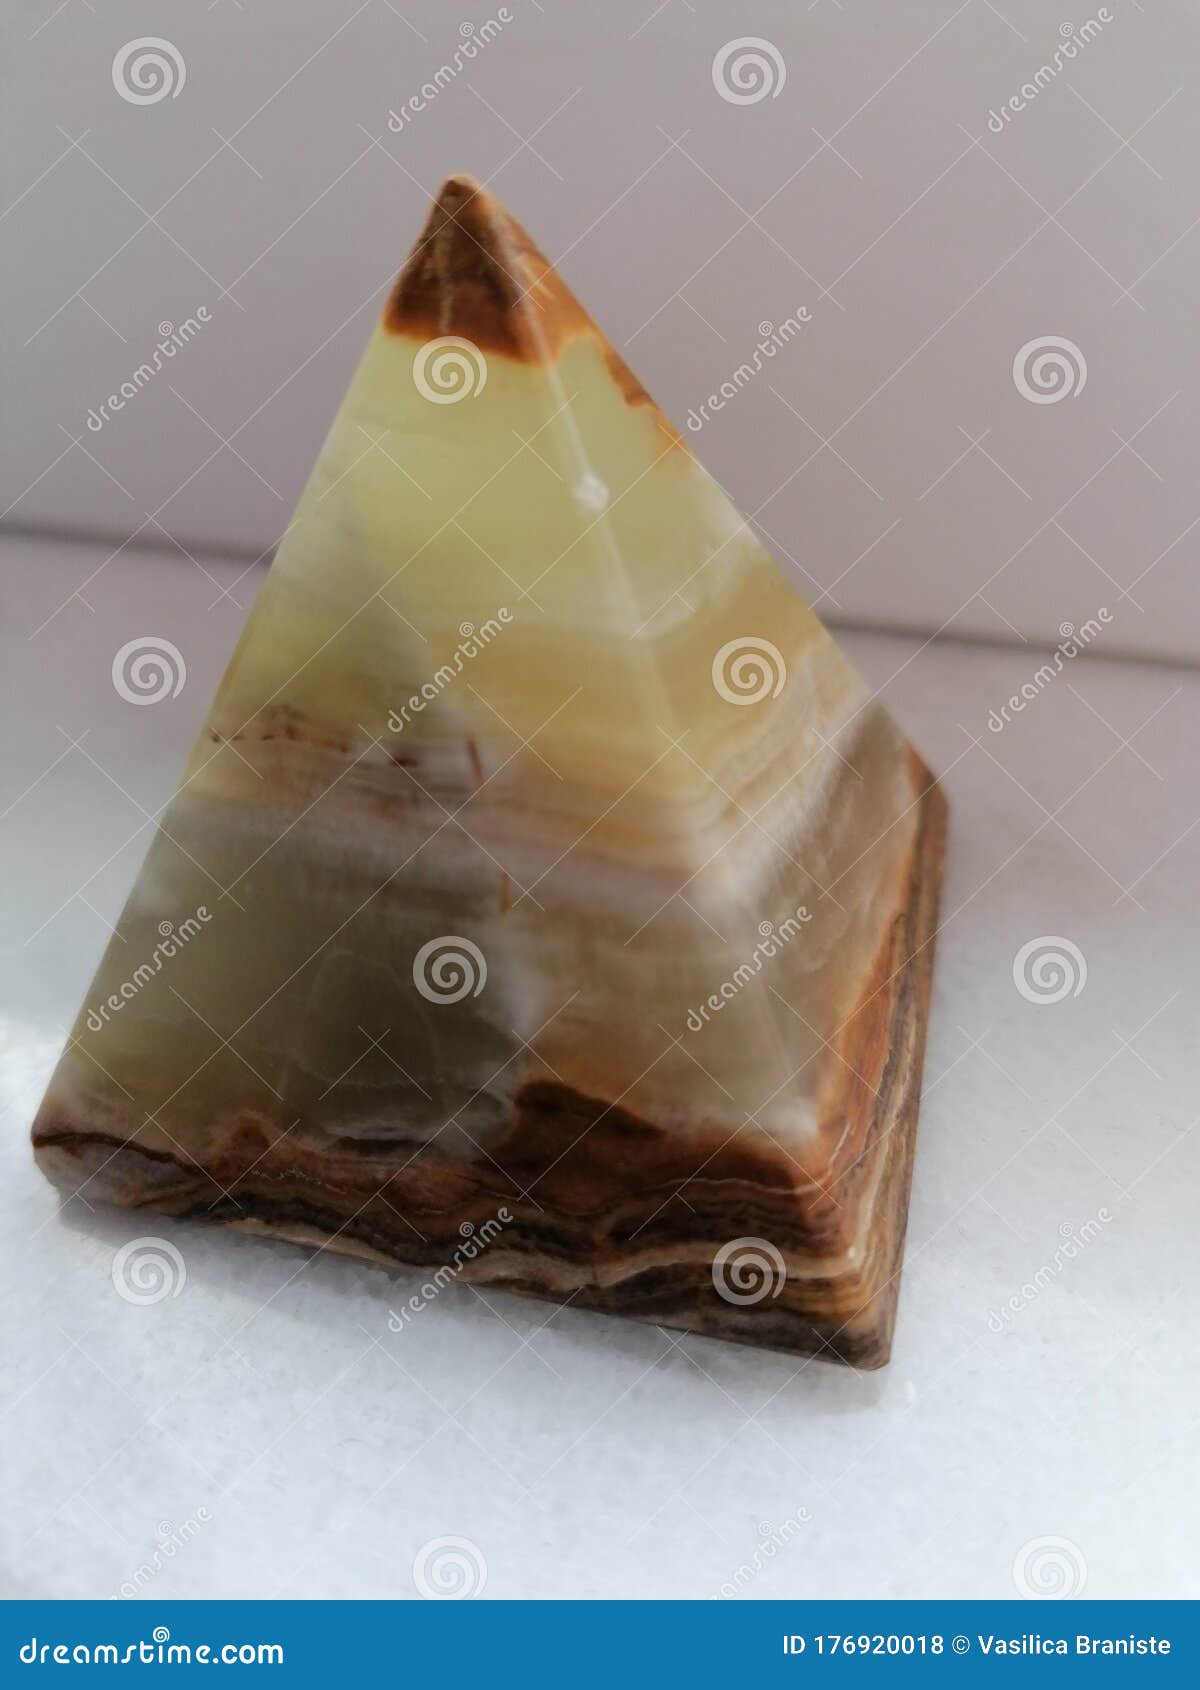 pyramid of onix on white backround